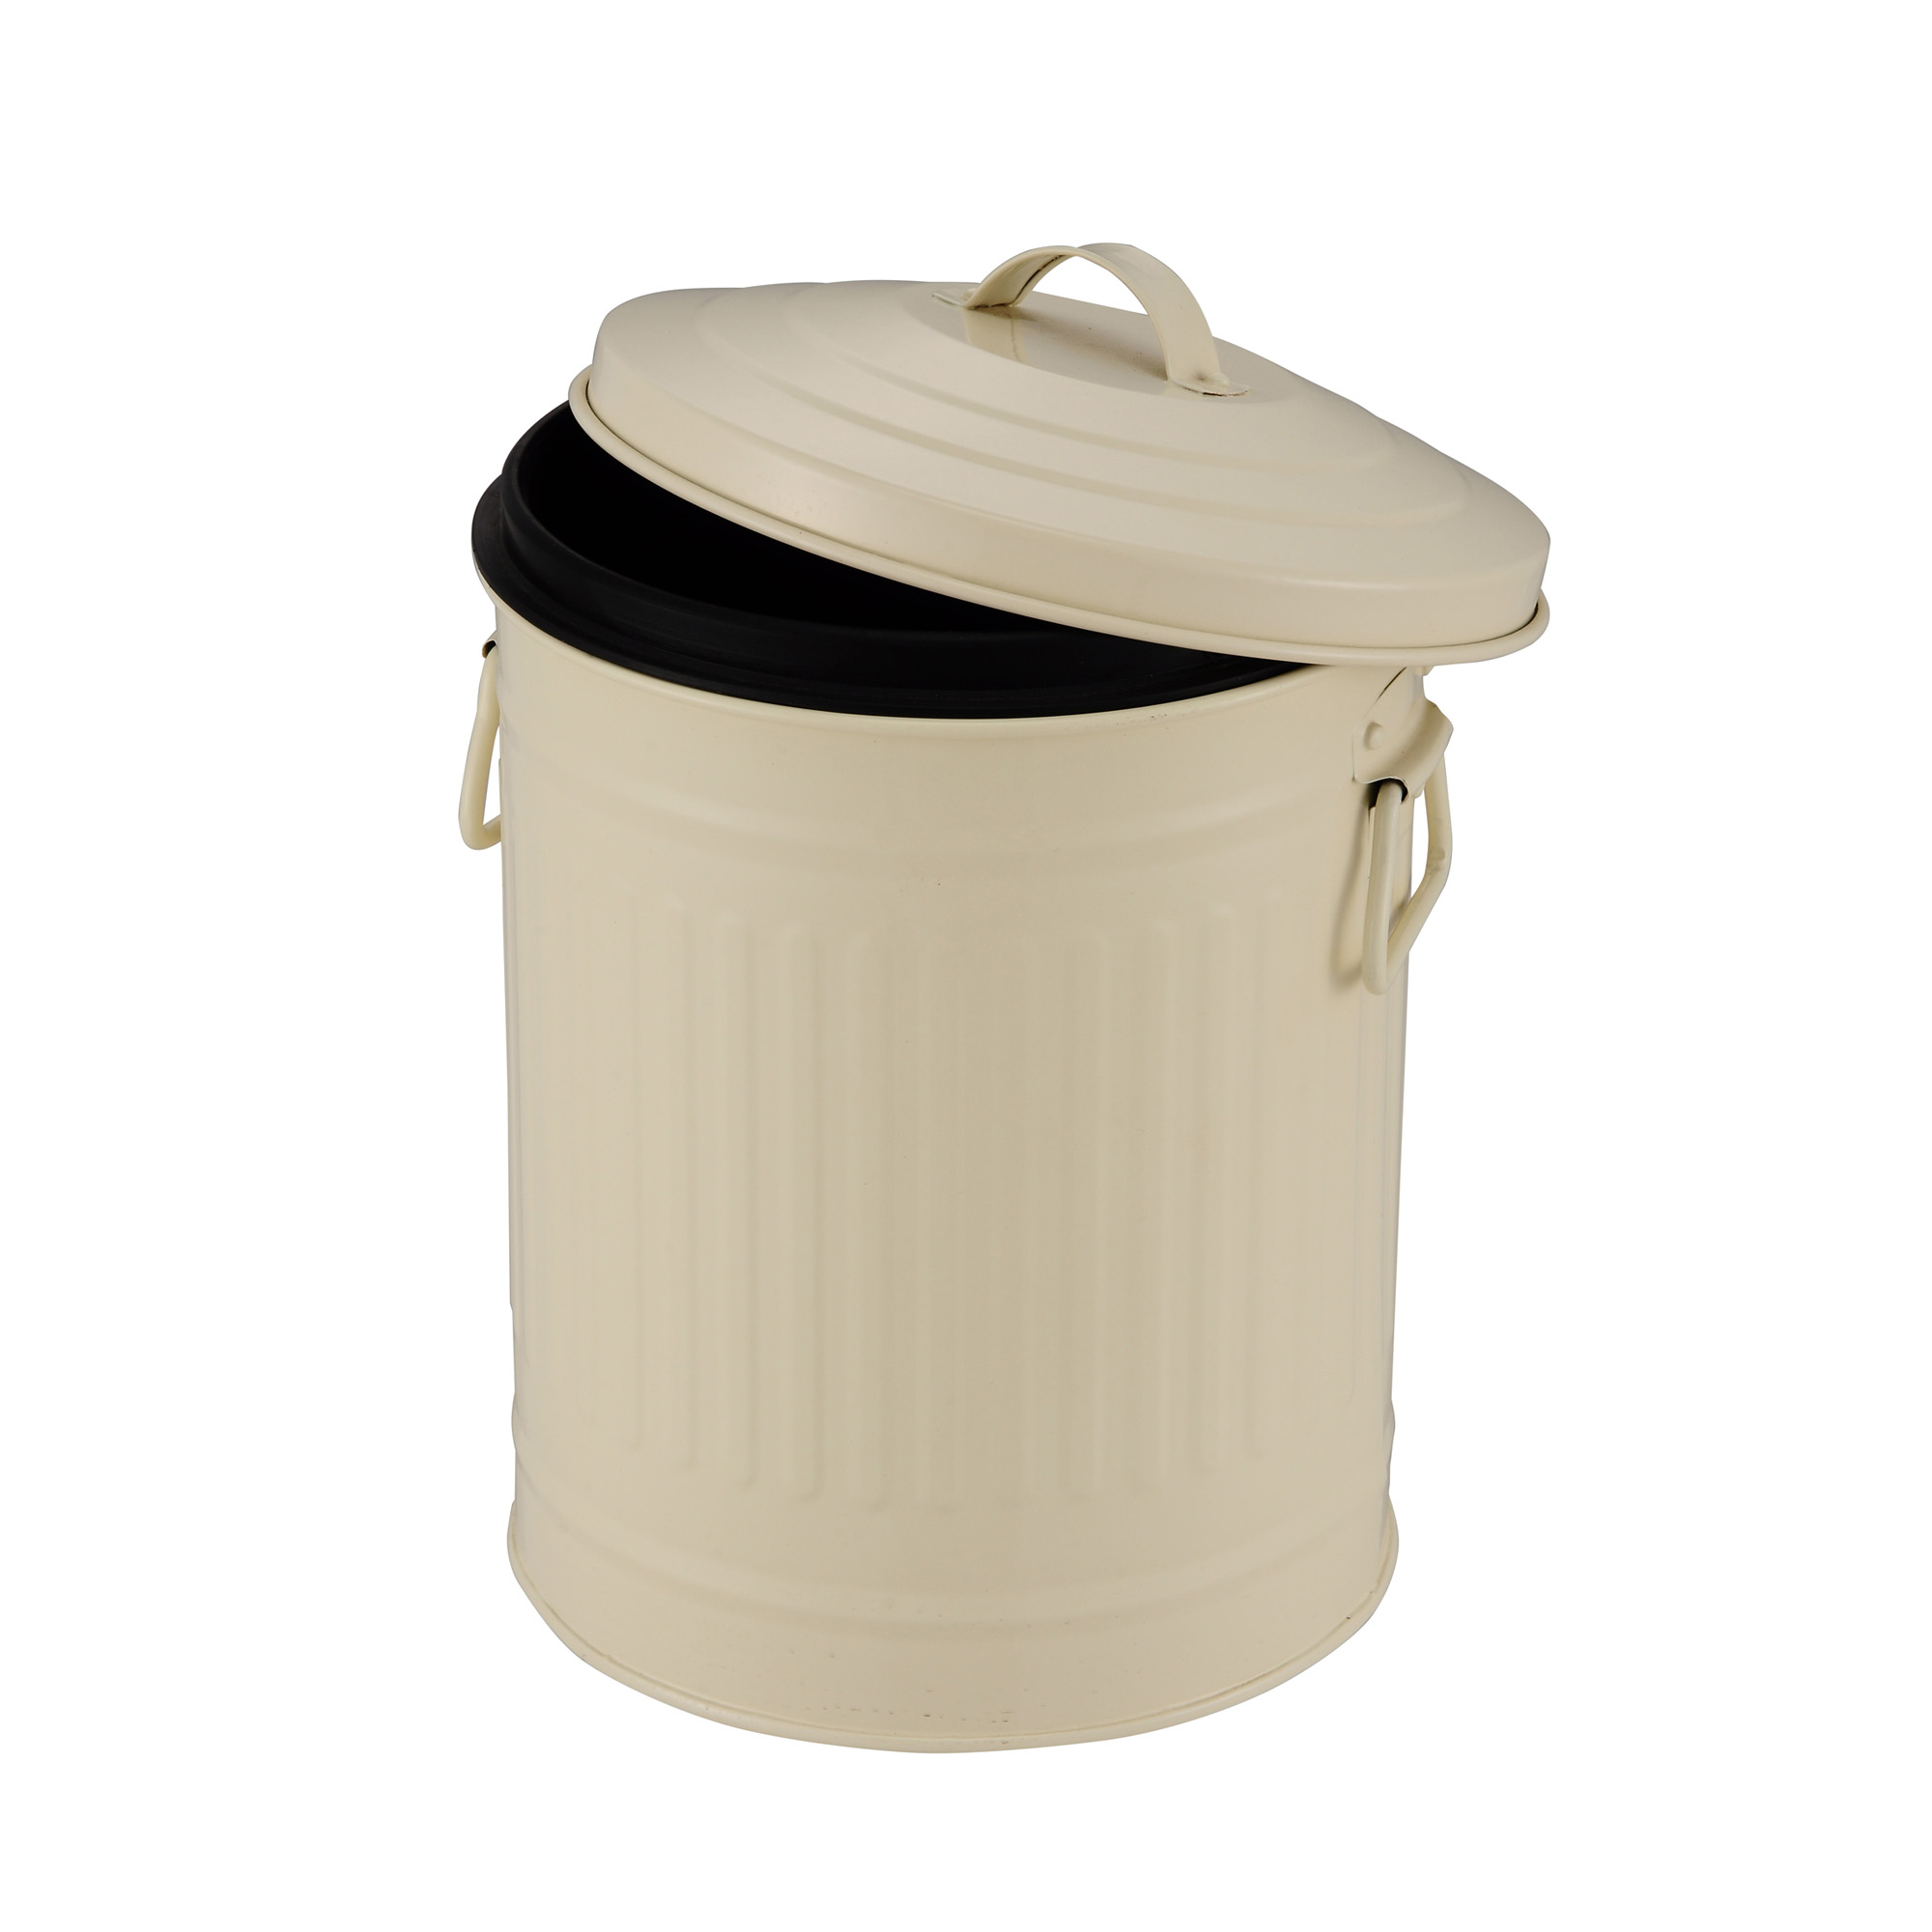 storage bin with lid